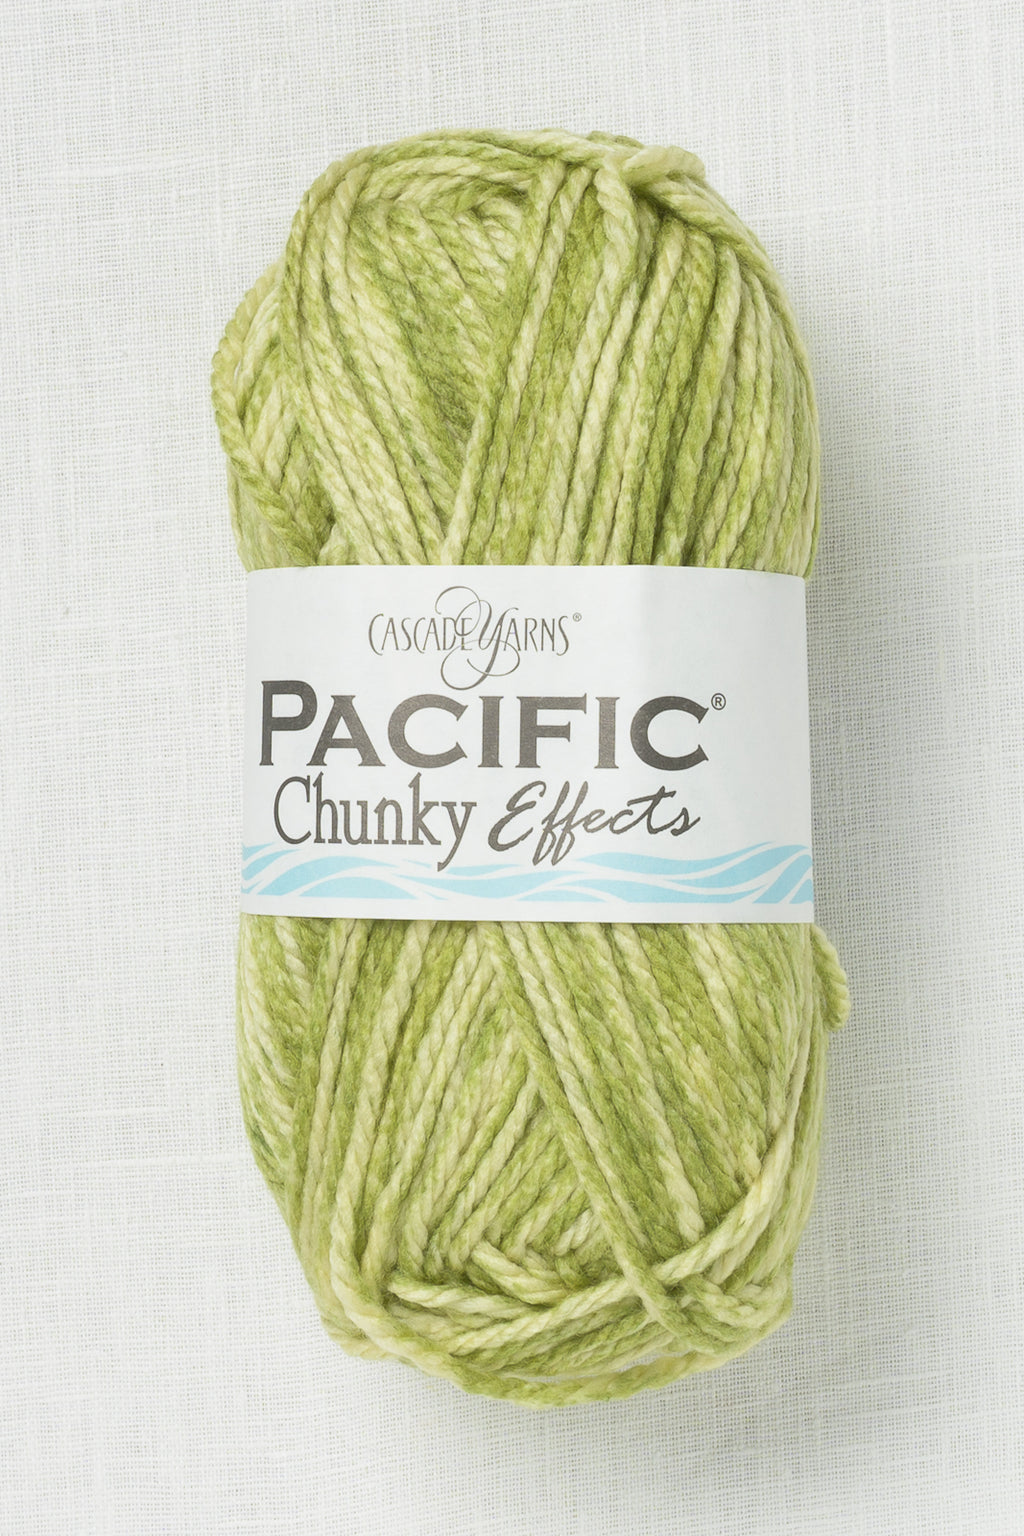 Cascade Yarns Pacific Bulky Yarn at WEBS